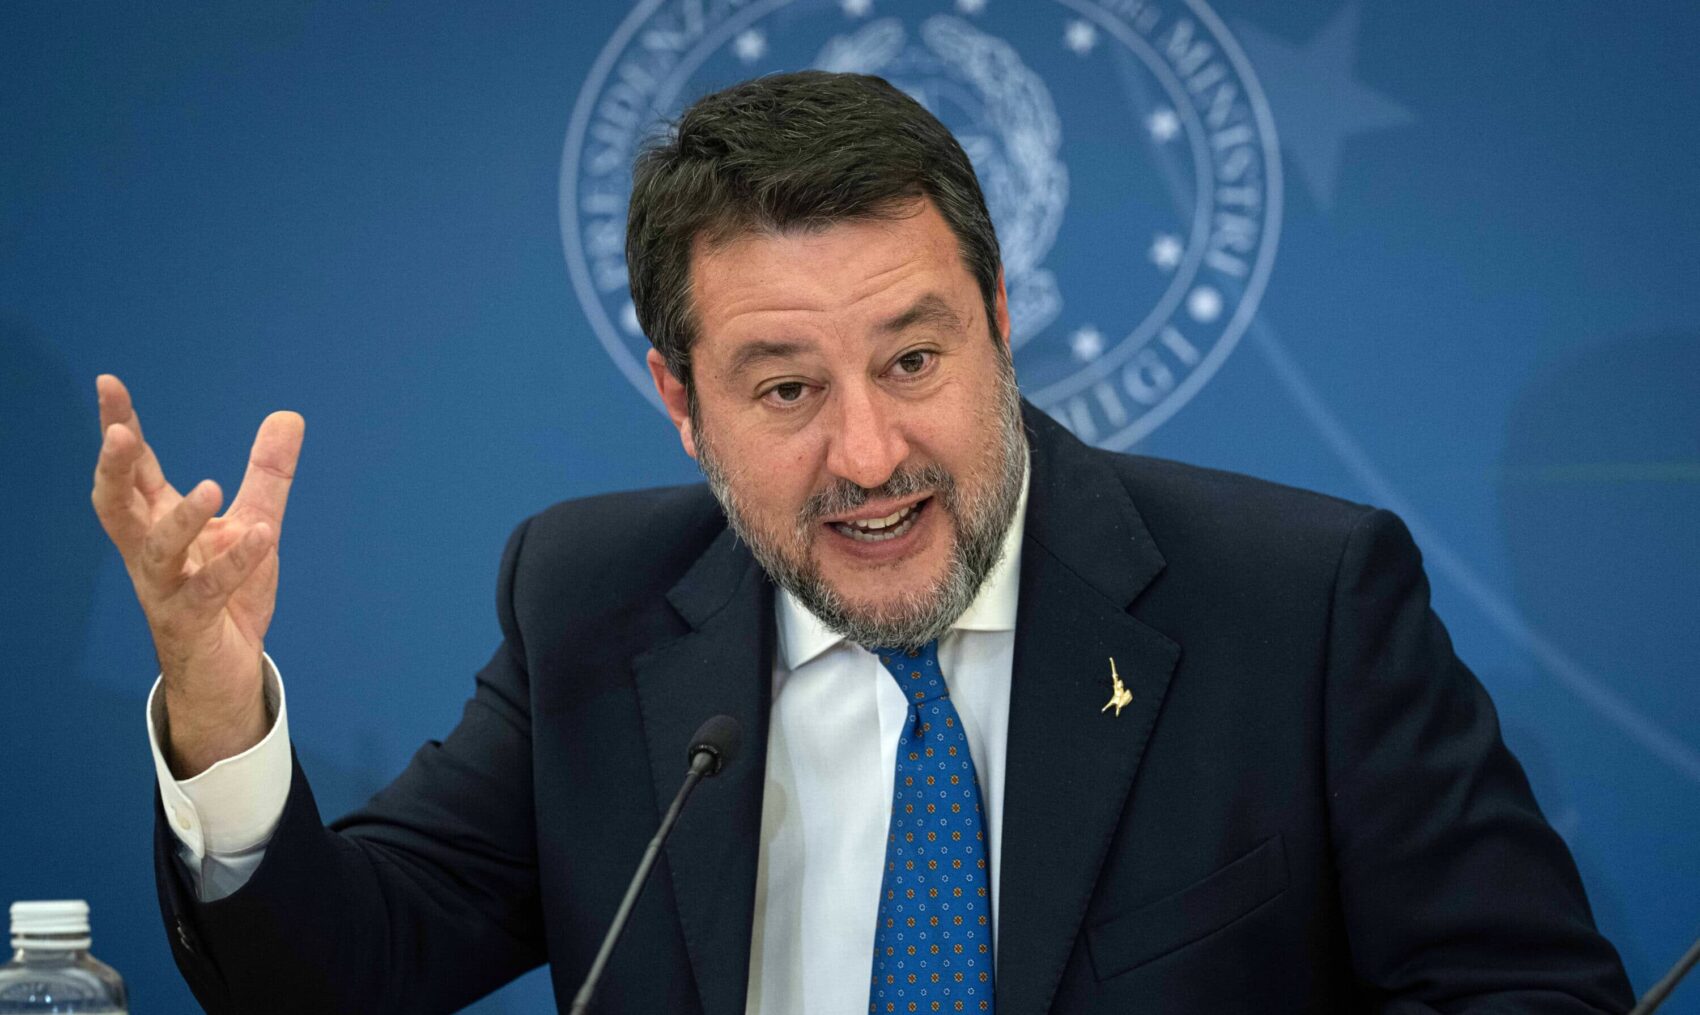 Nucleare, per Salvini è fondamentale: “Chi dice di No è ignorante”